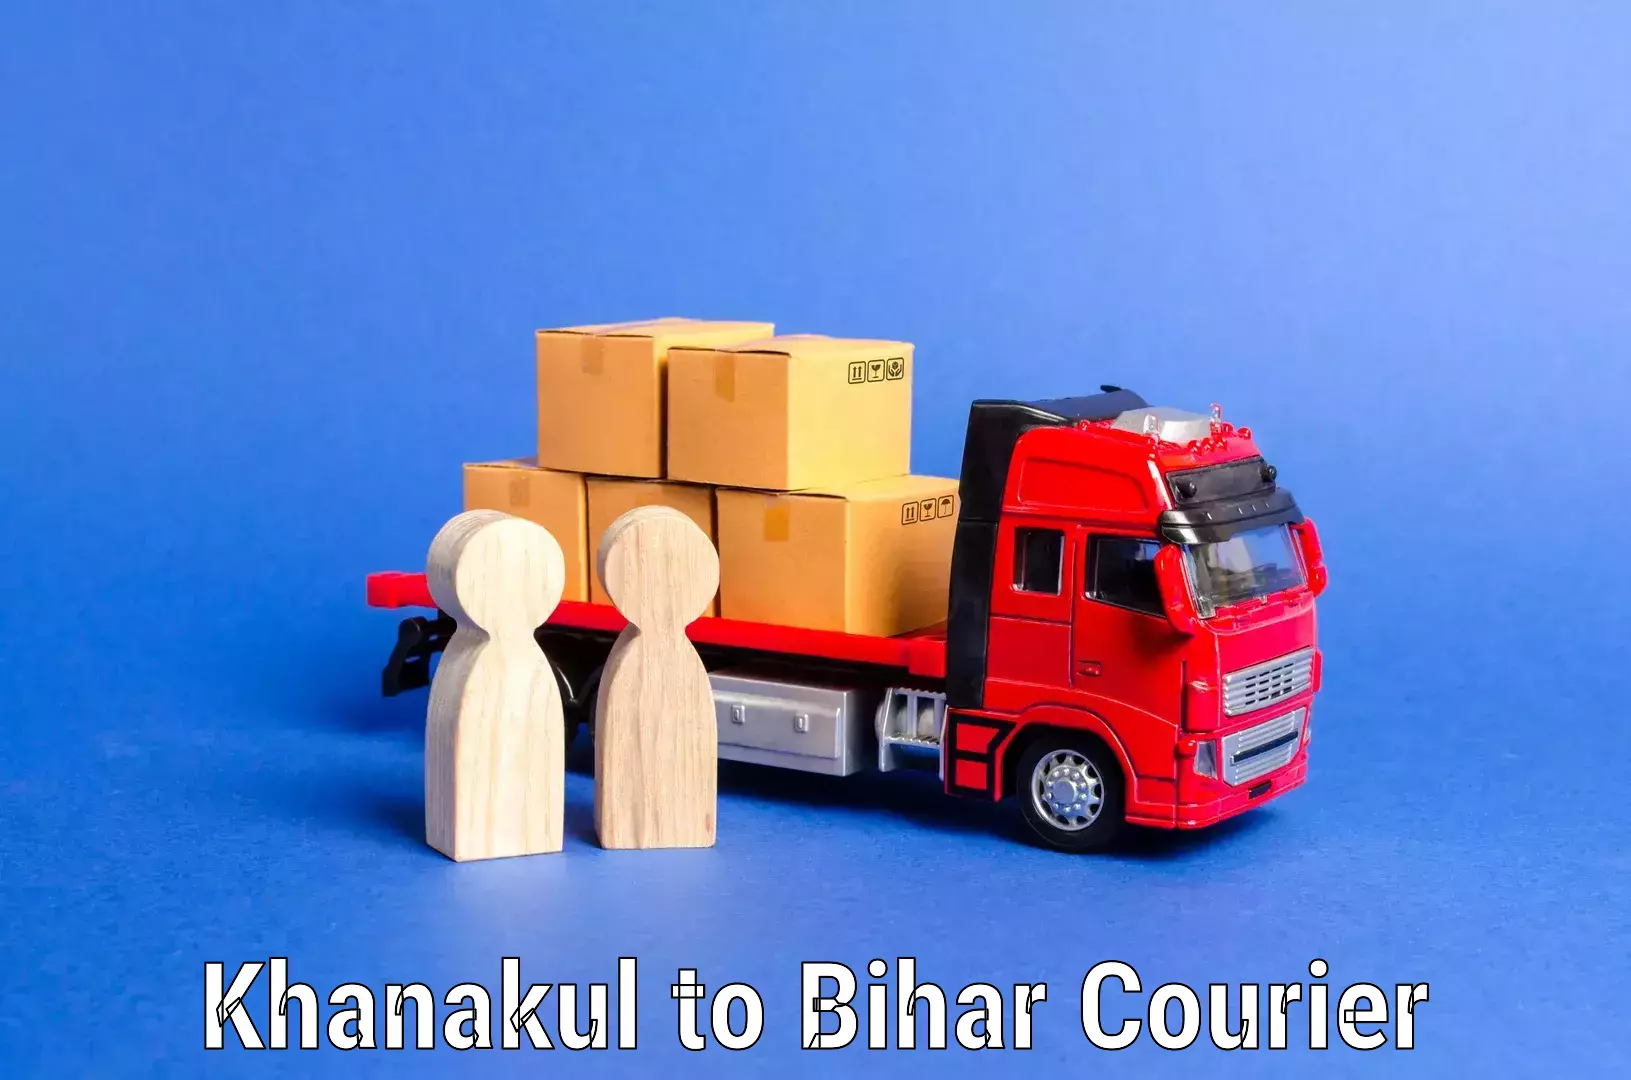 Home relocation experts Khanakul to Bihar